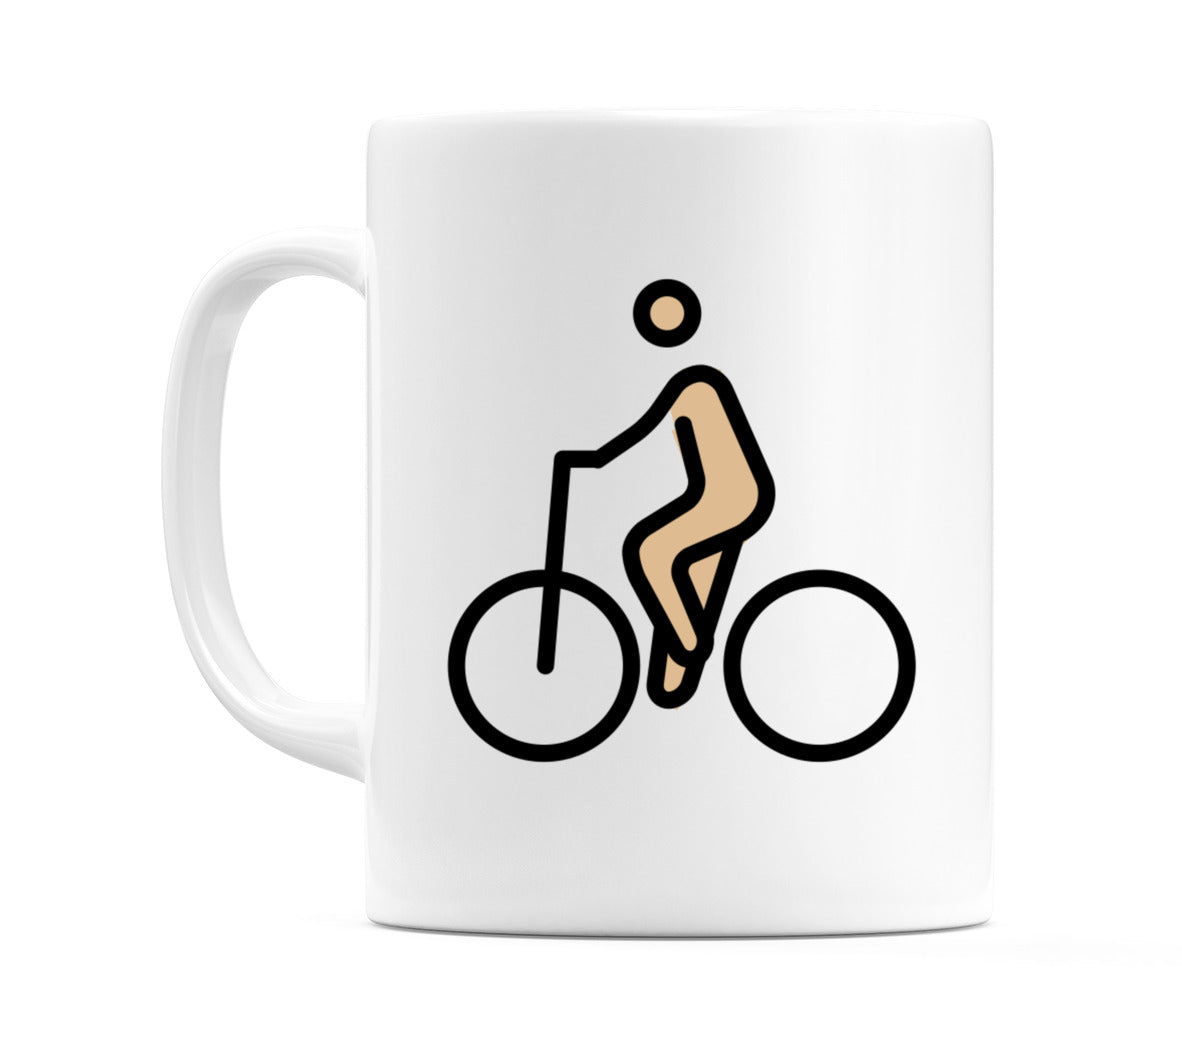 Person Biking: Medium-Light Skin Tone Emoji Mug